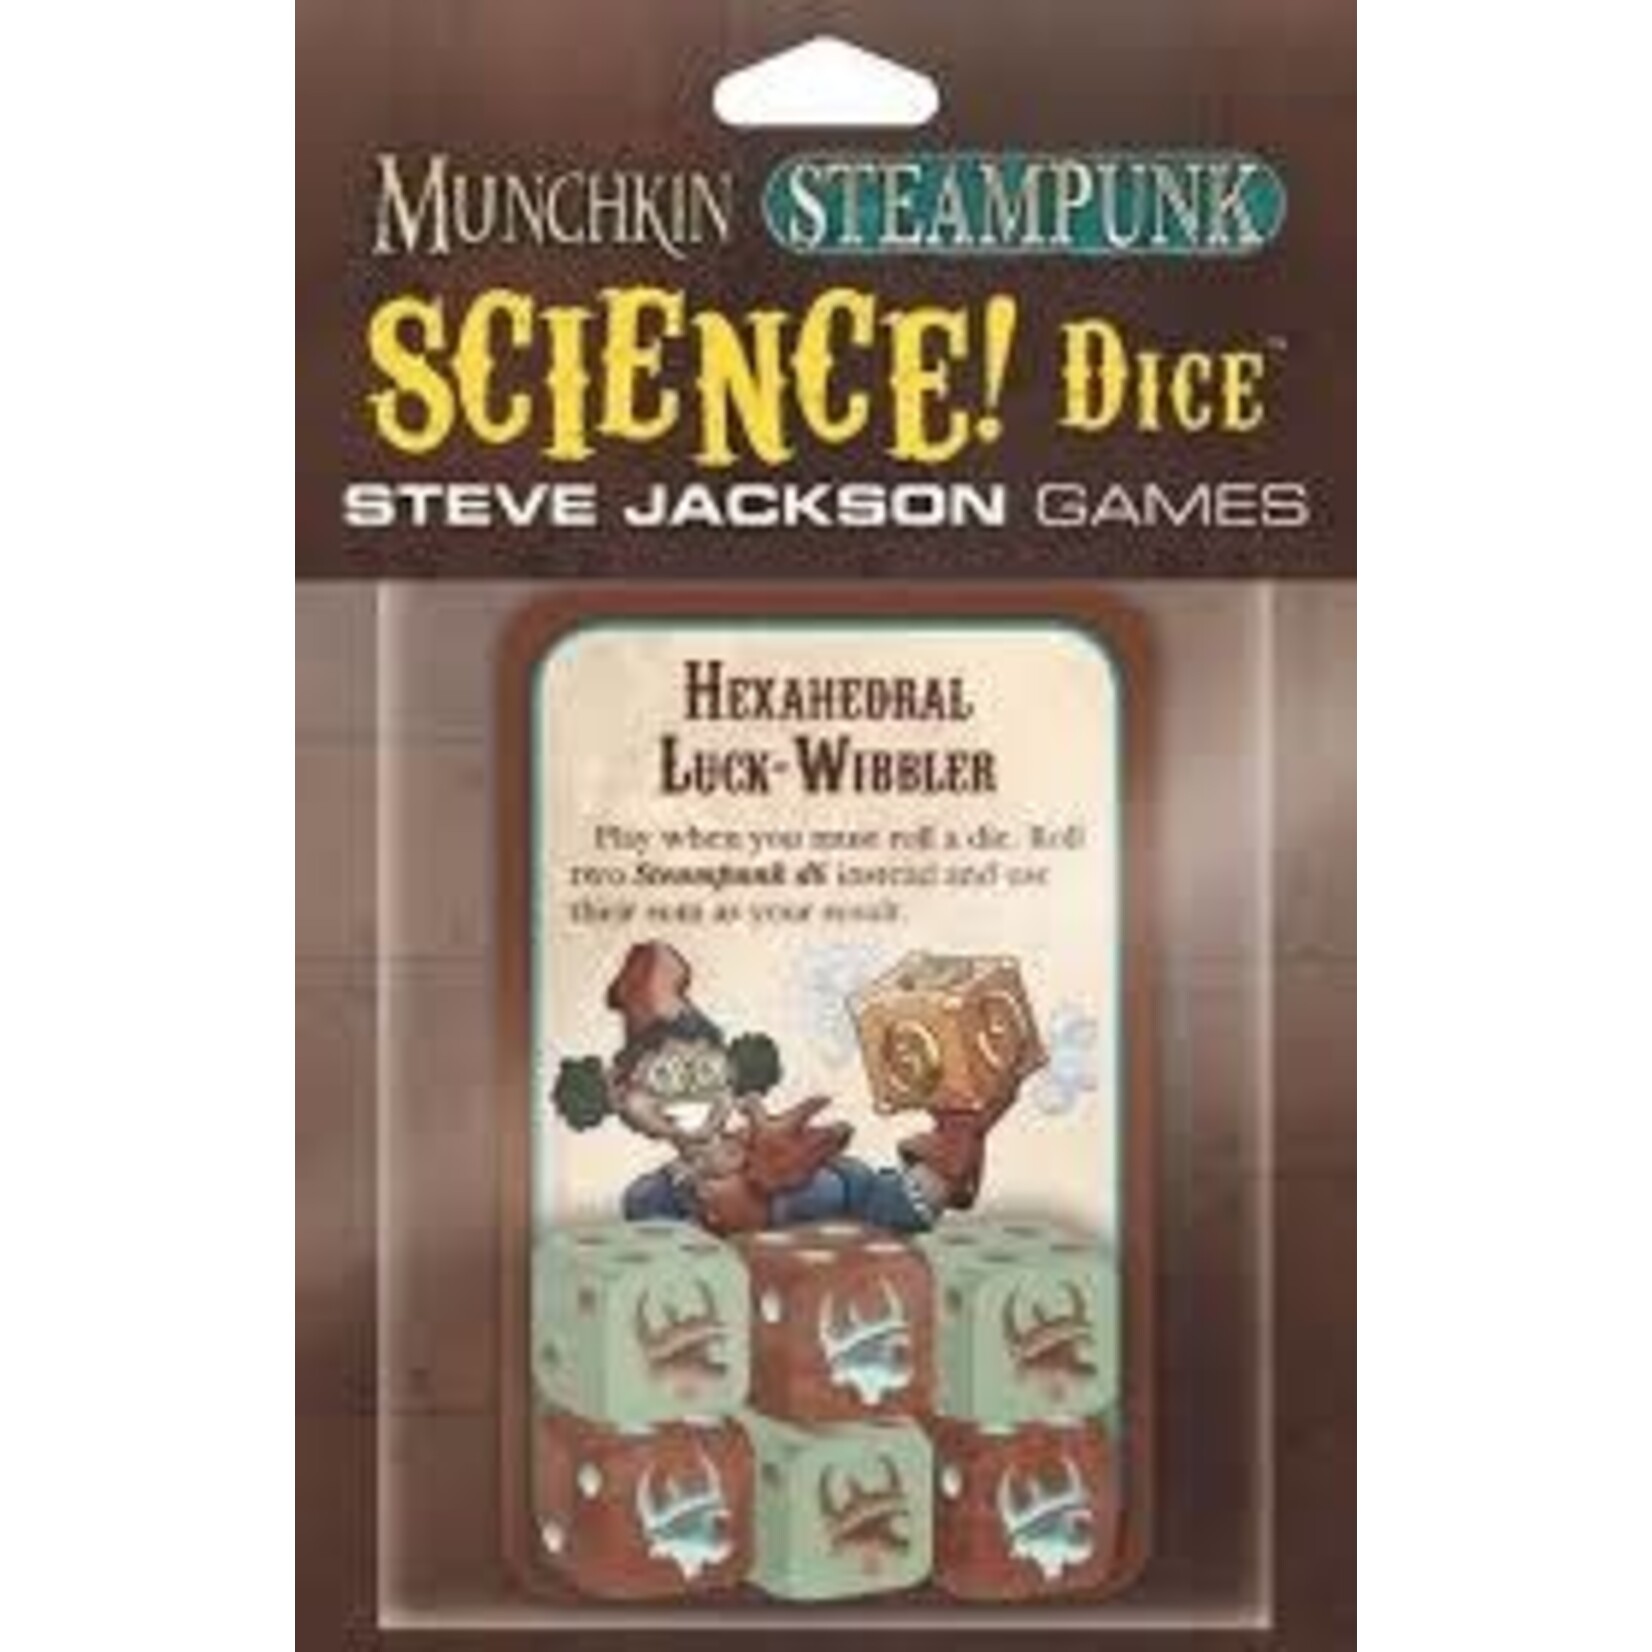 Steve Jackson Games Munchkin Steampunk Science Dice